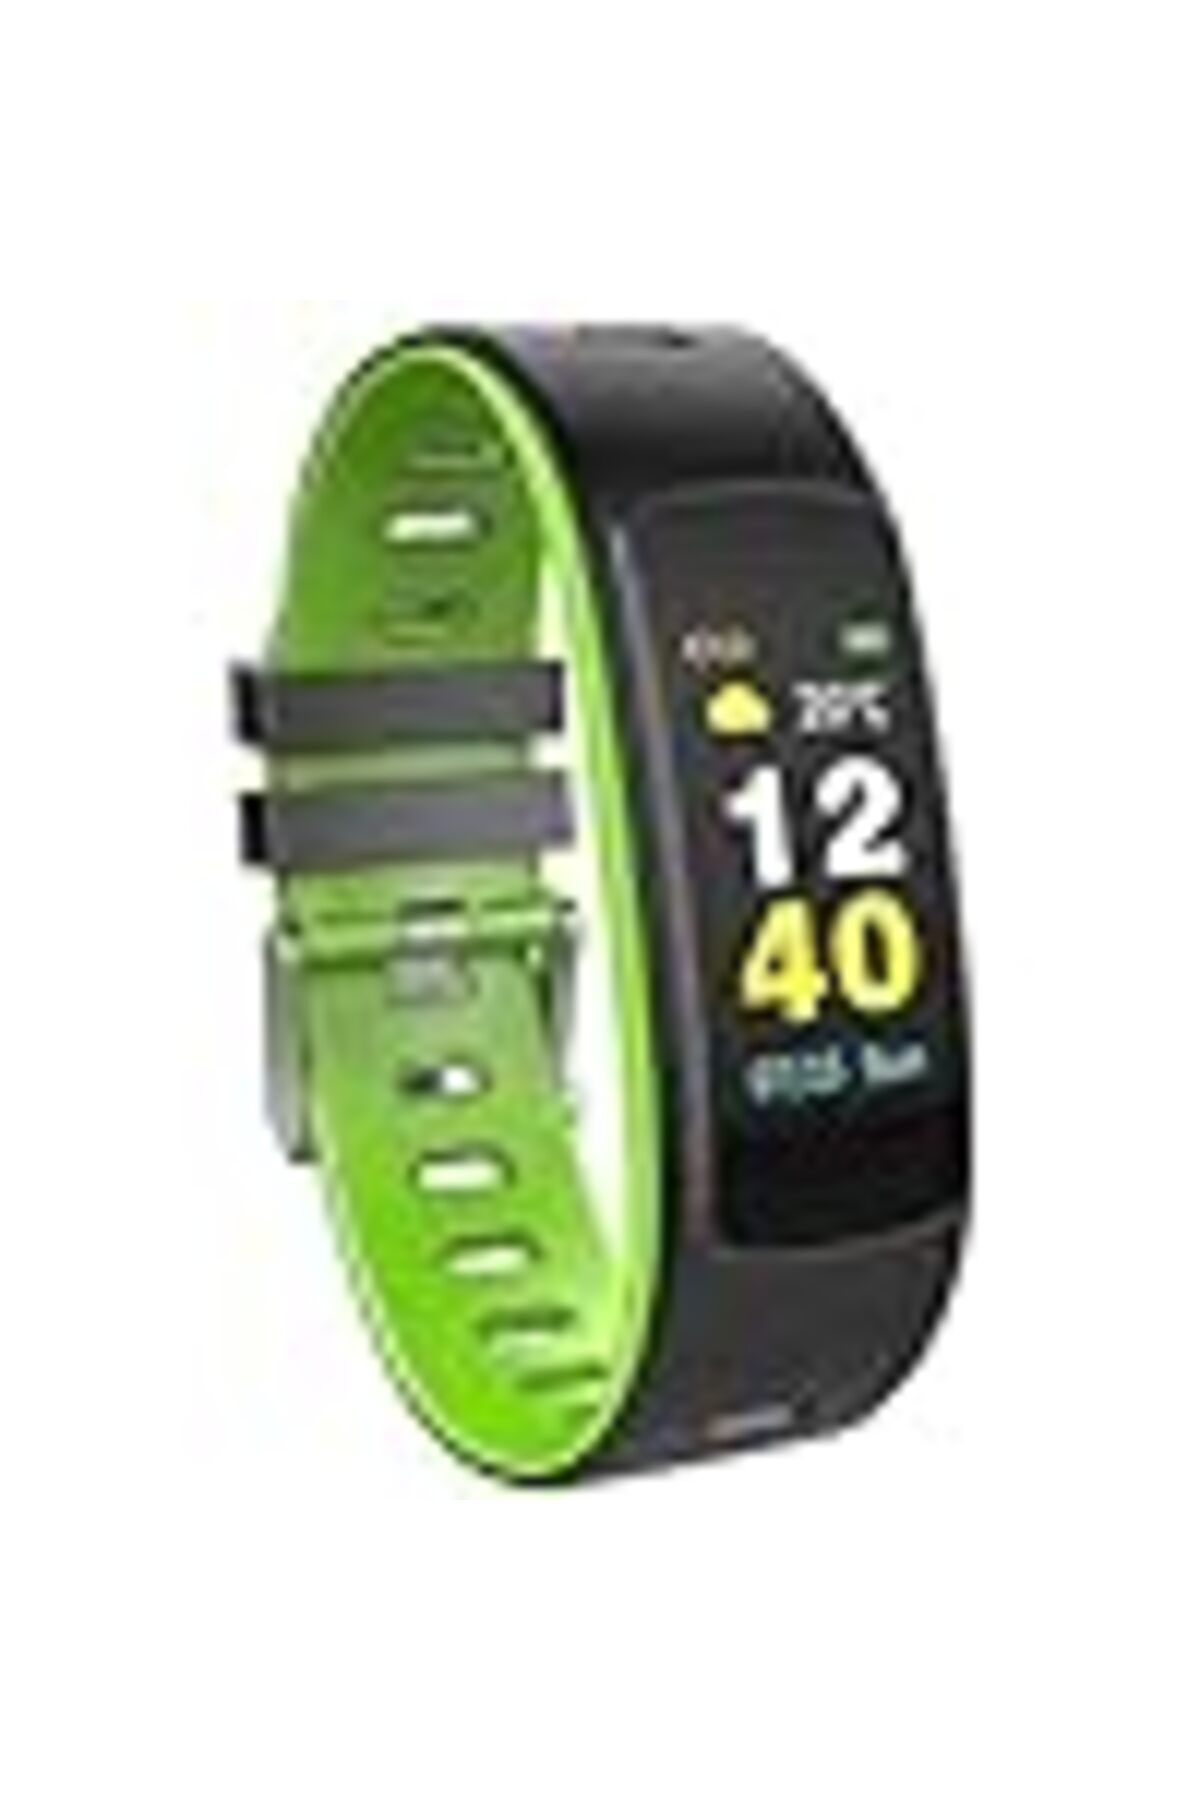 NoHar Everest Ever Fit W45 Android/ıos Smart Watch Full Dokunmatik Renkli Ekran Yeşil/siyah Akıllı Bilekli